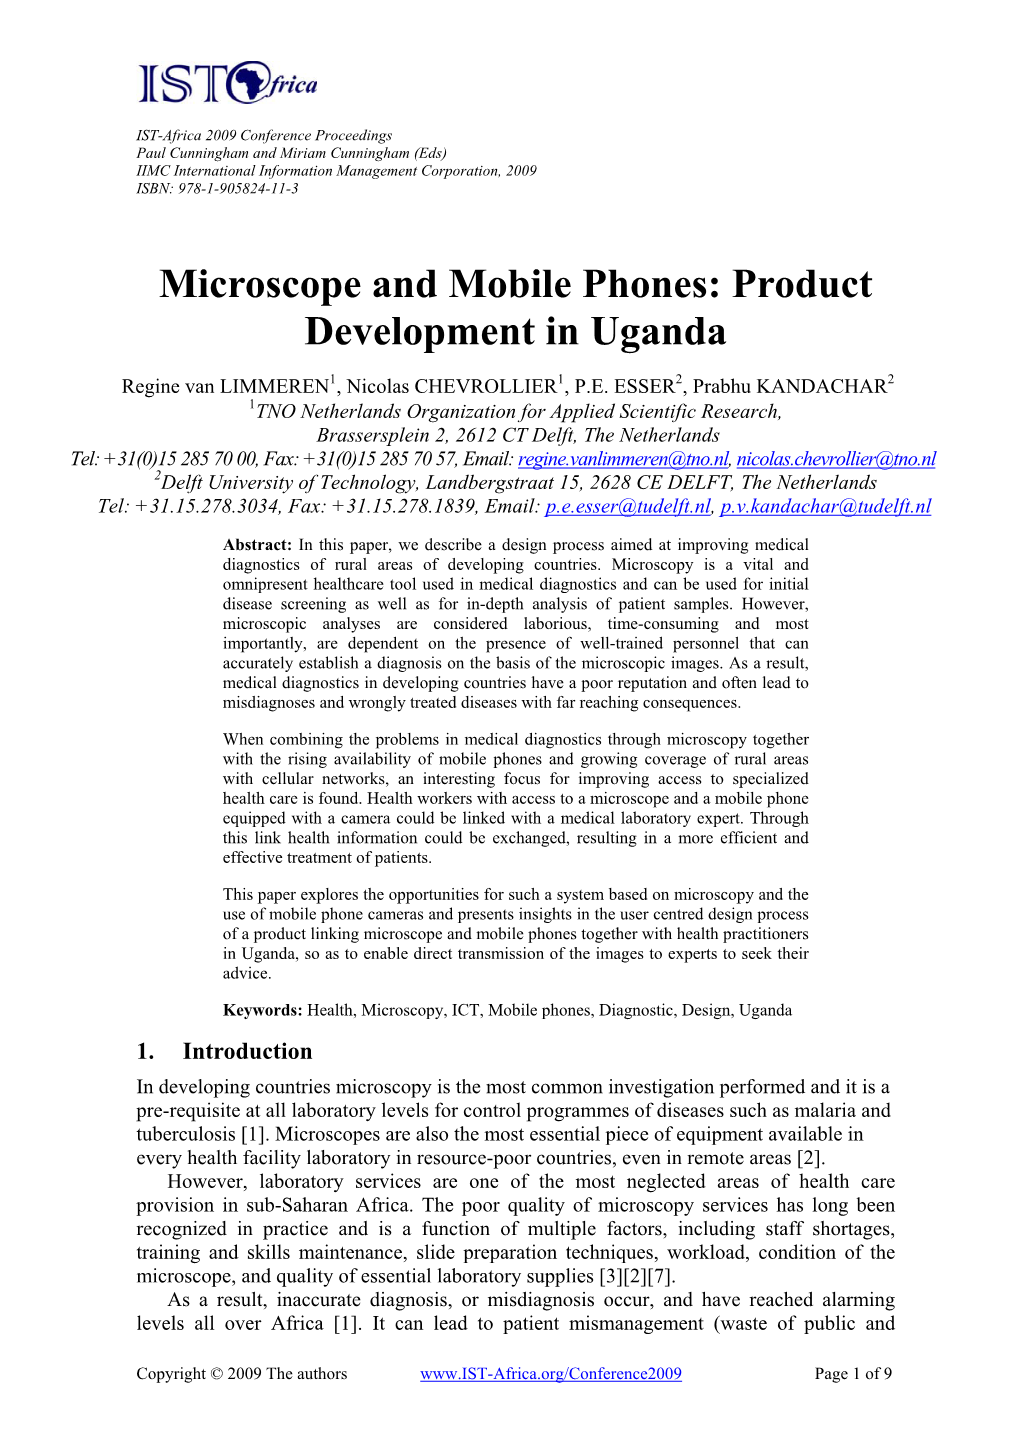 Microscope and Mobile Phones: Product Development in Uganda